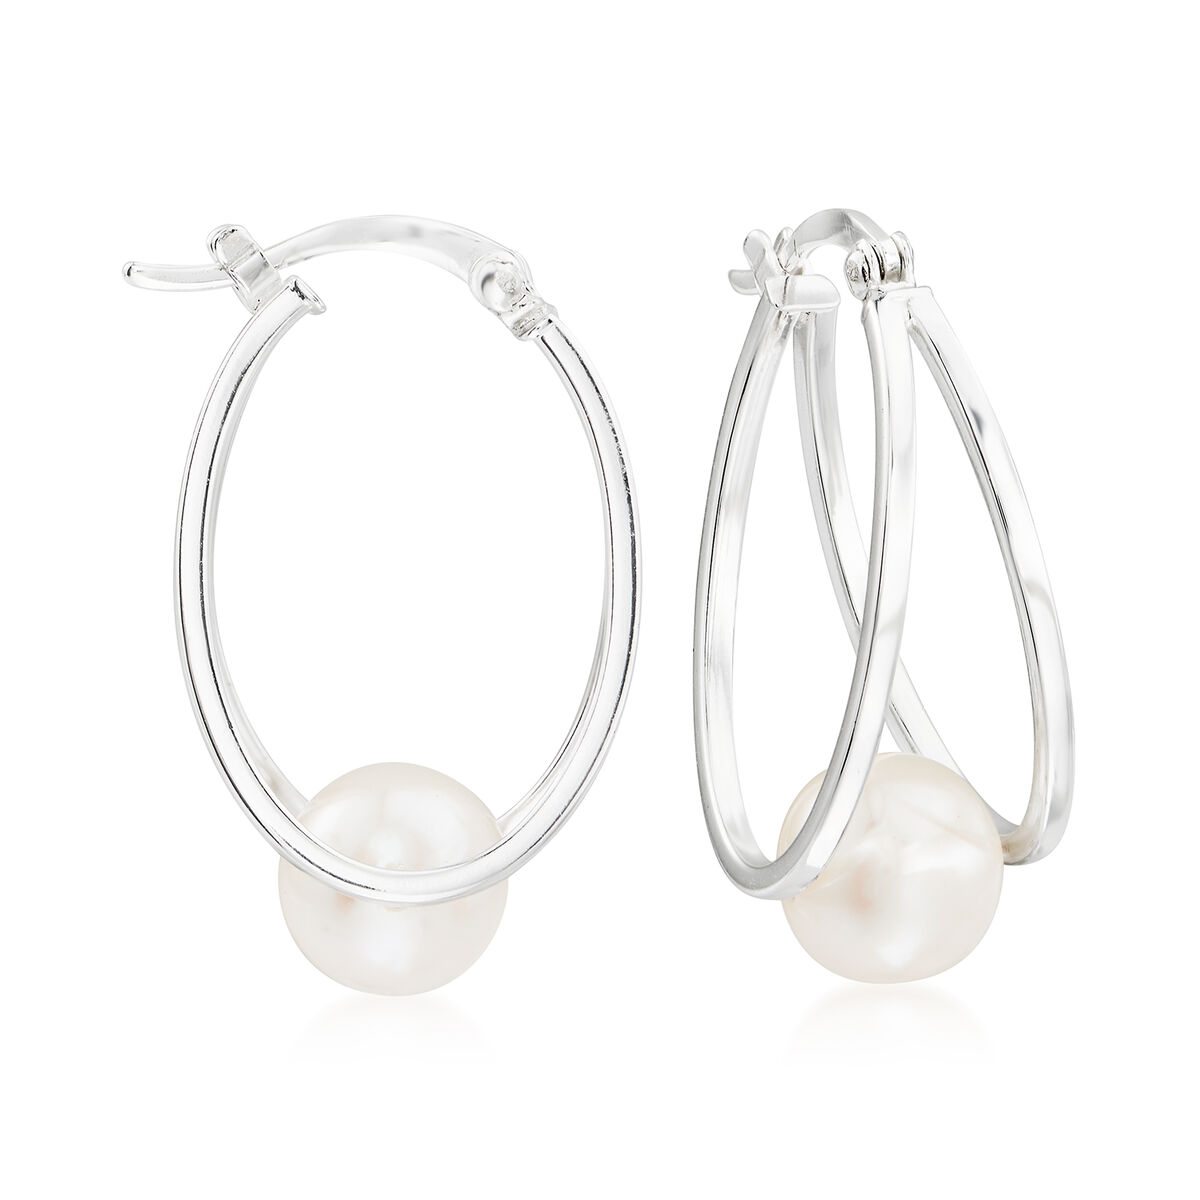 8-9mm Cultured Pearl Double Hoop Earrings in Sterling Silver. 1"